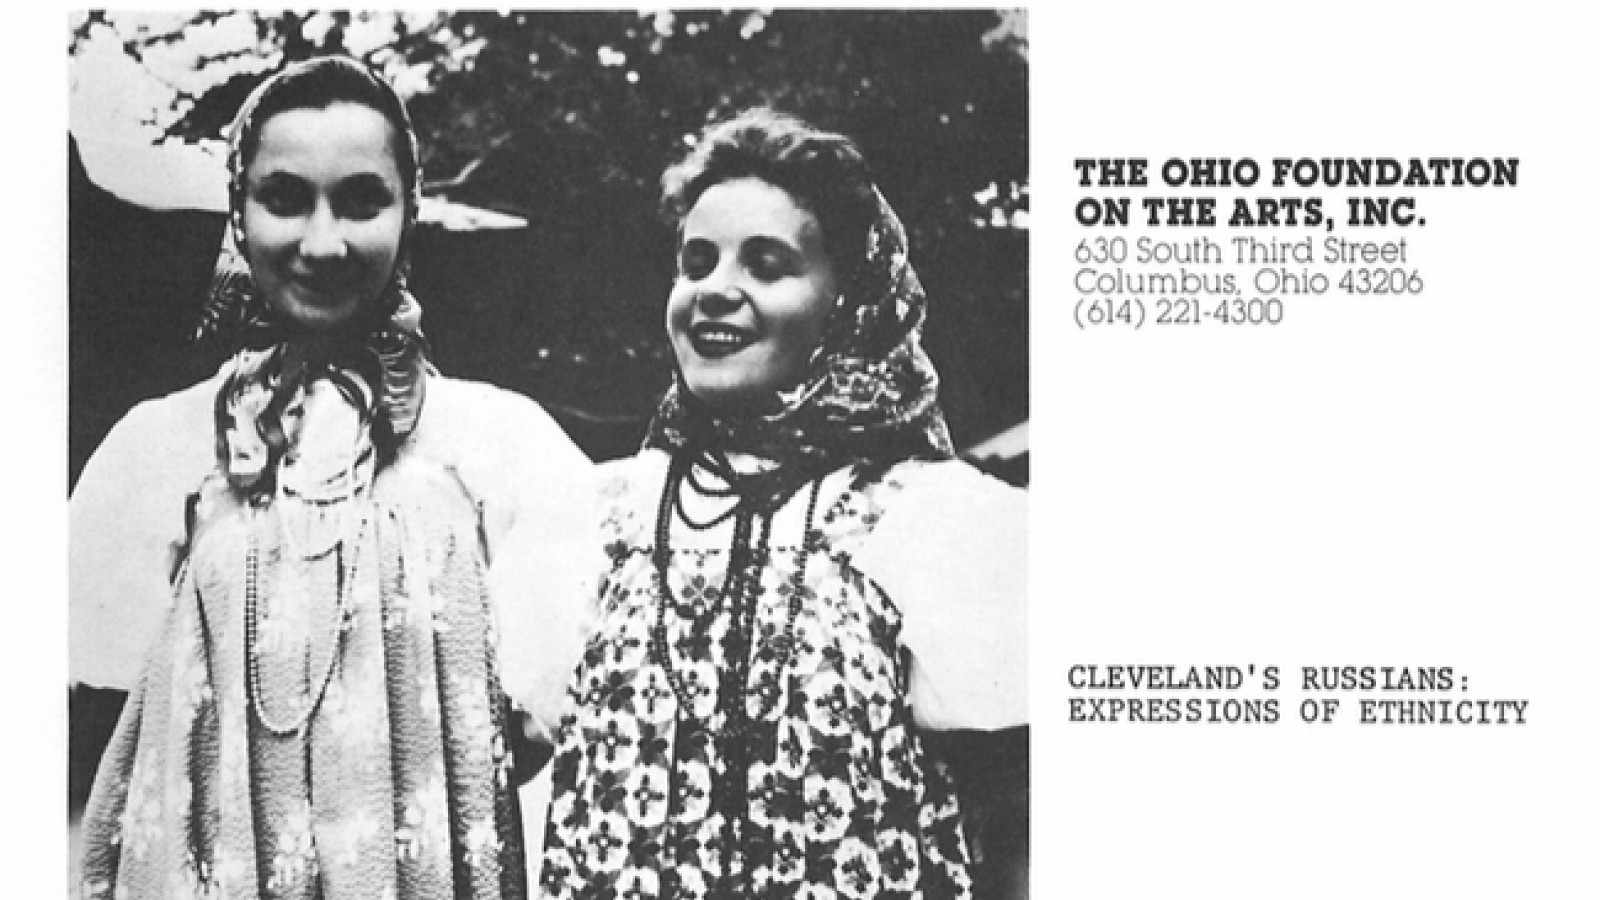 Announcing the Cleveland's Russians Exhibit, 1979.